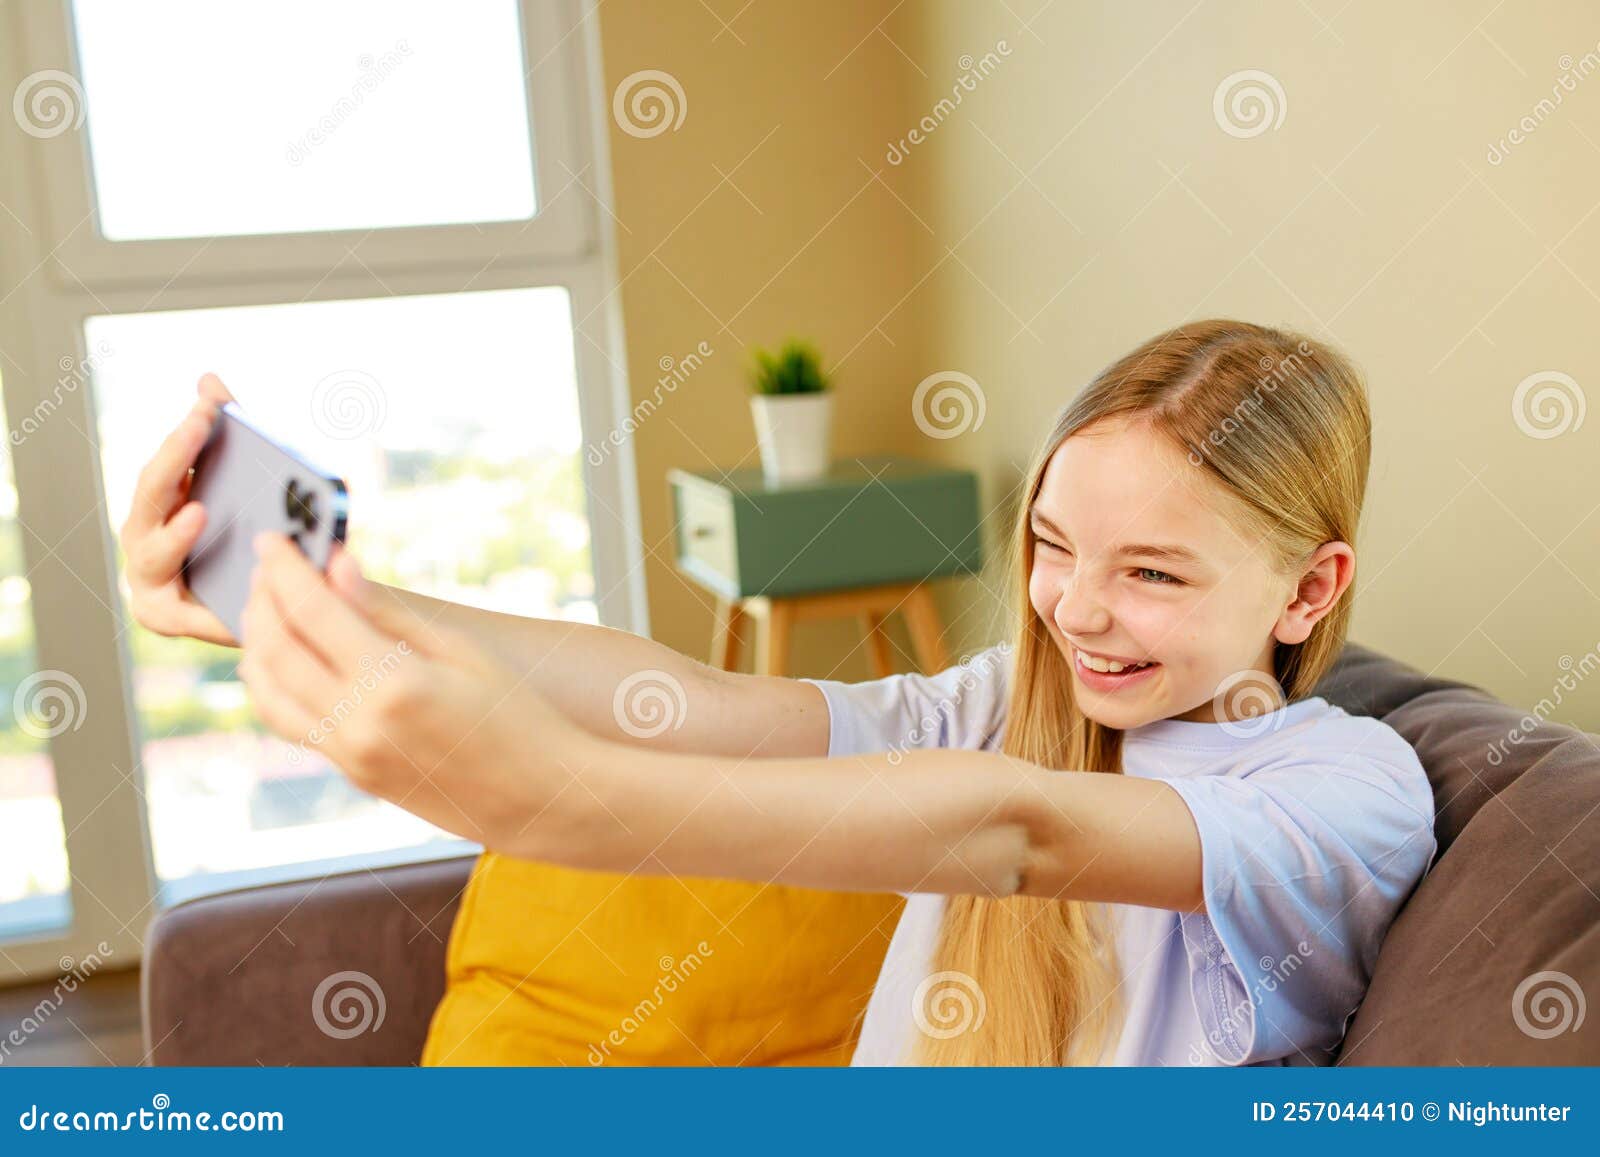 Pre-teen Girl Making Selfie Photos on Her Smartphone in Cozy Living ...